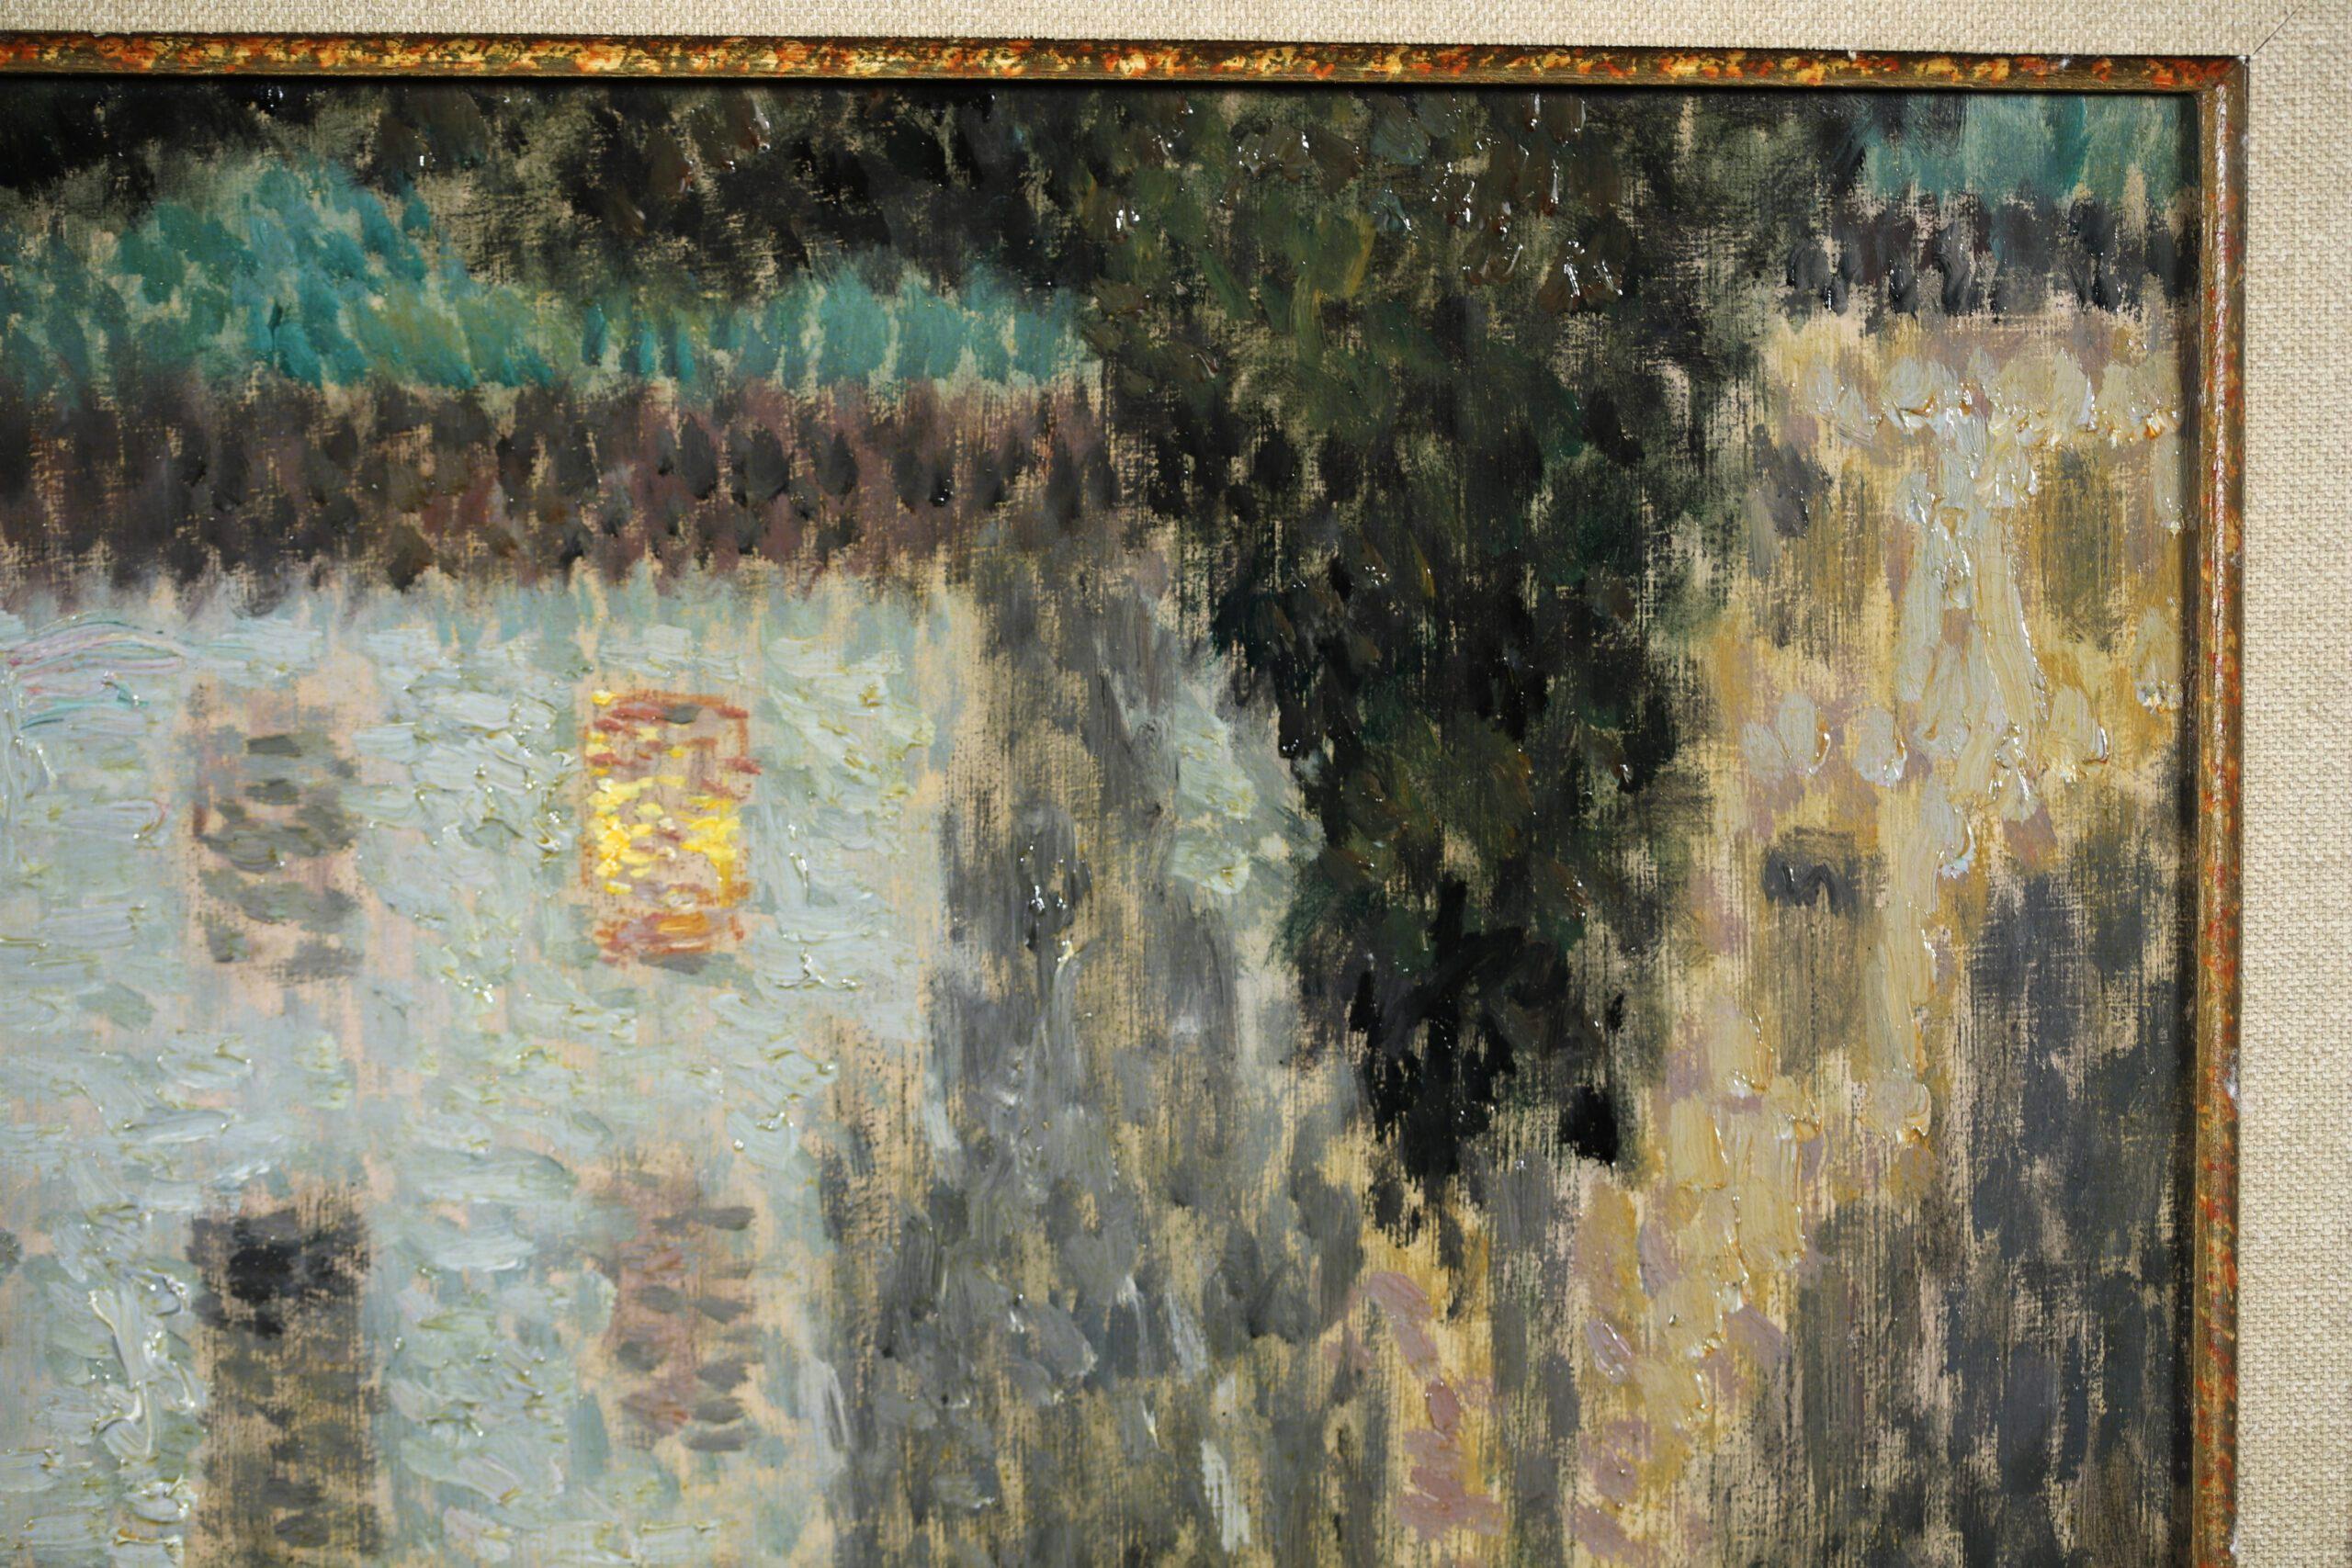 Nocturne, Fenetre Eclairee - Post Impressionist Landscape Oil - Henri Le Sidaner For Sale 3